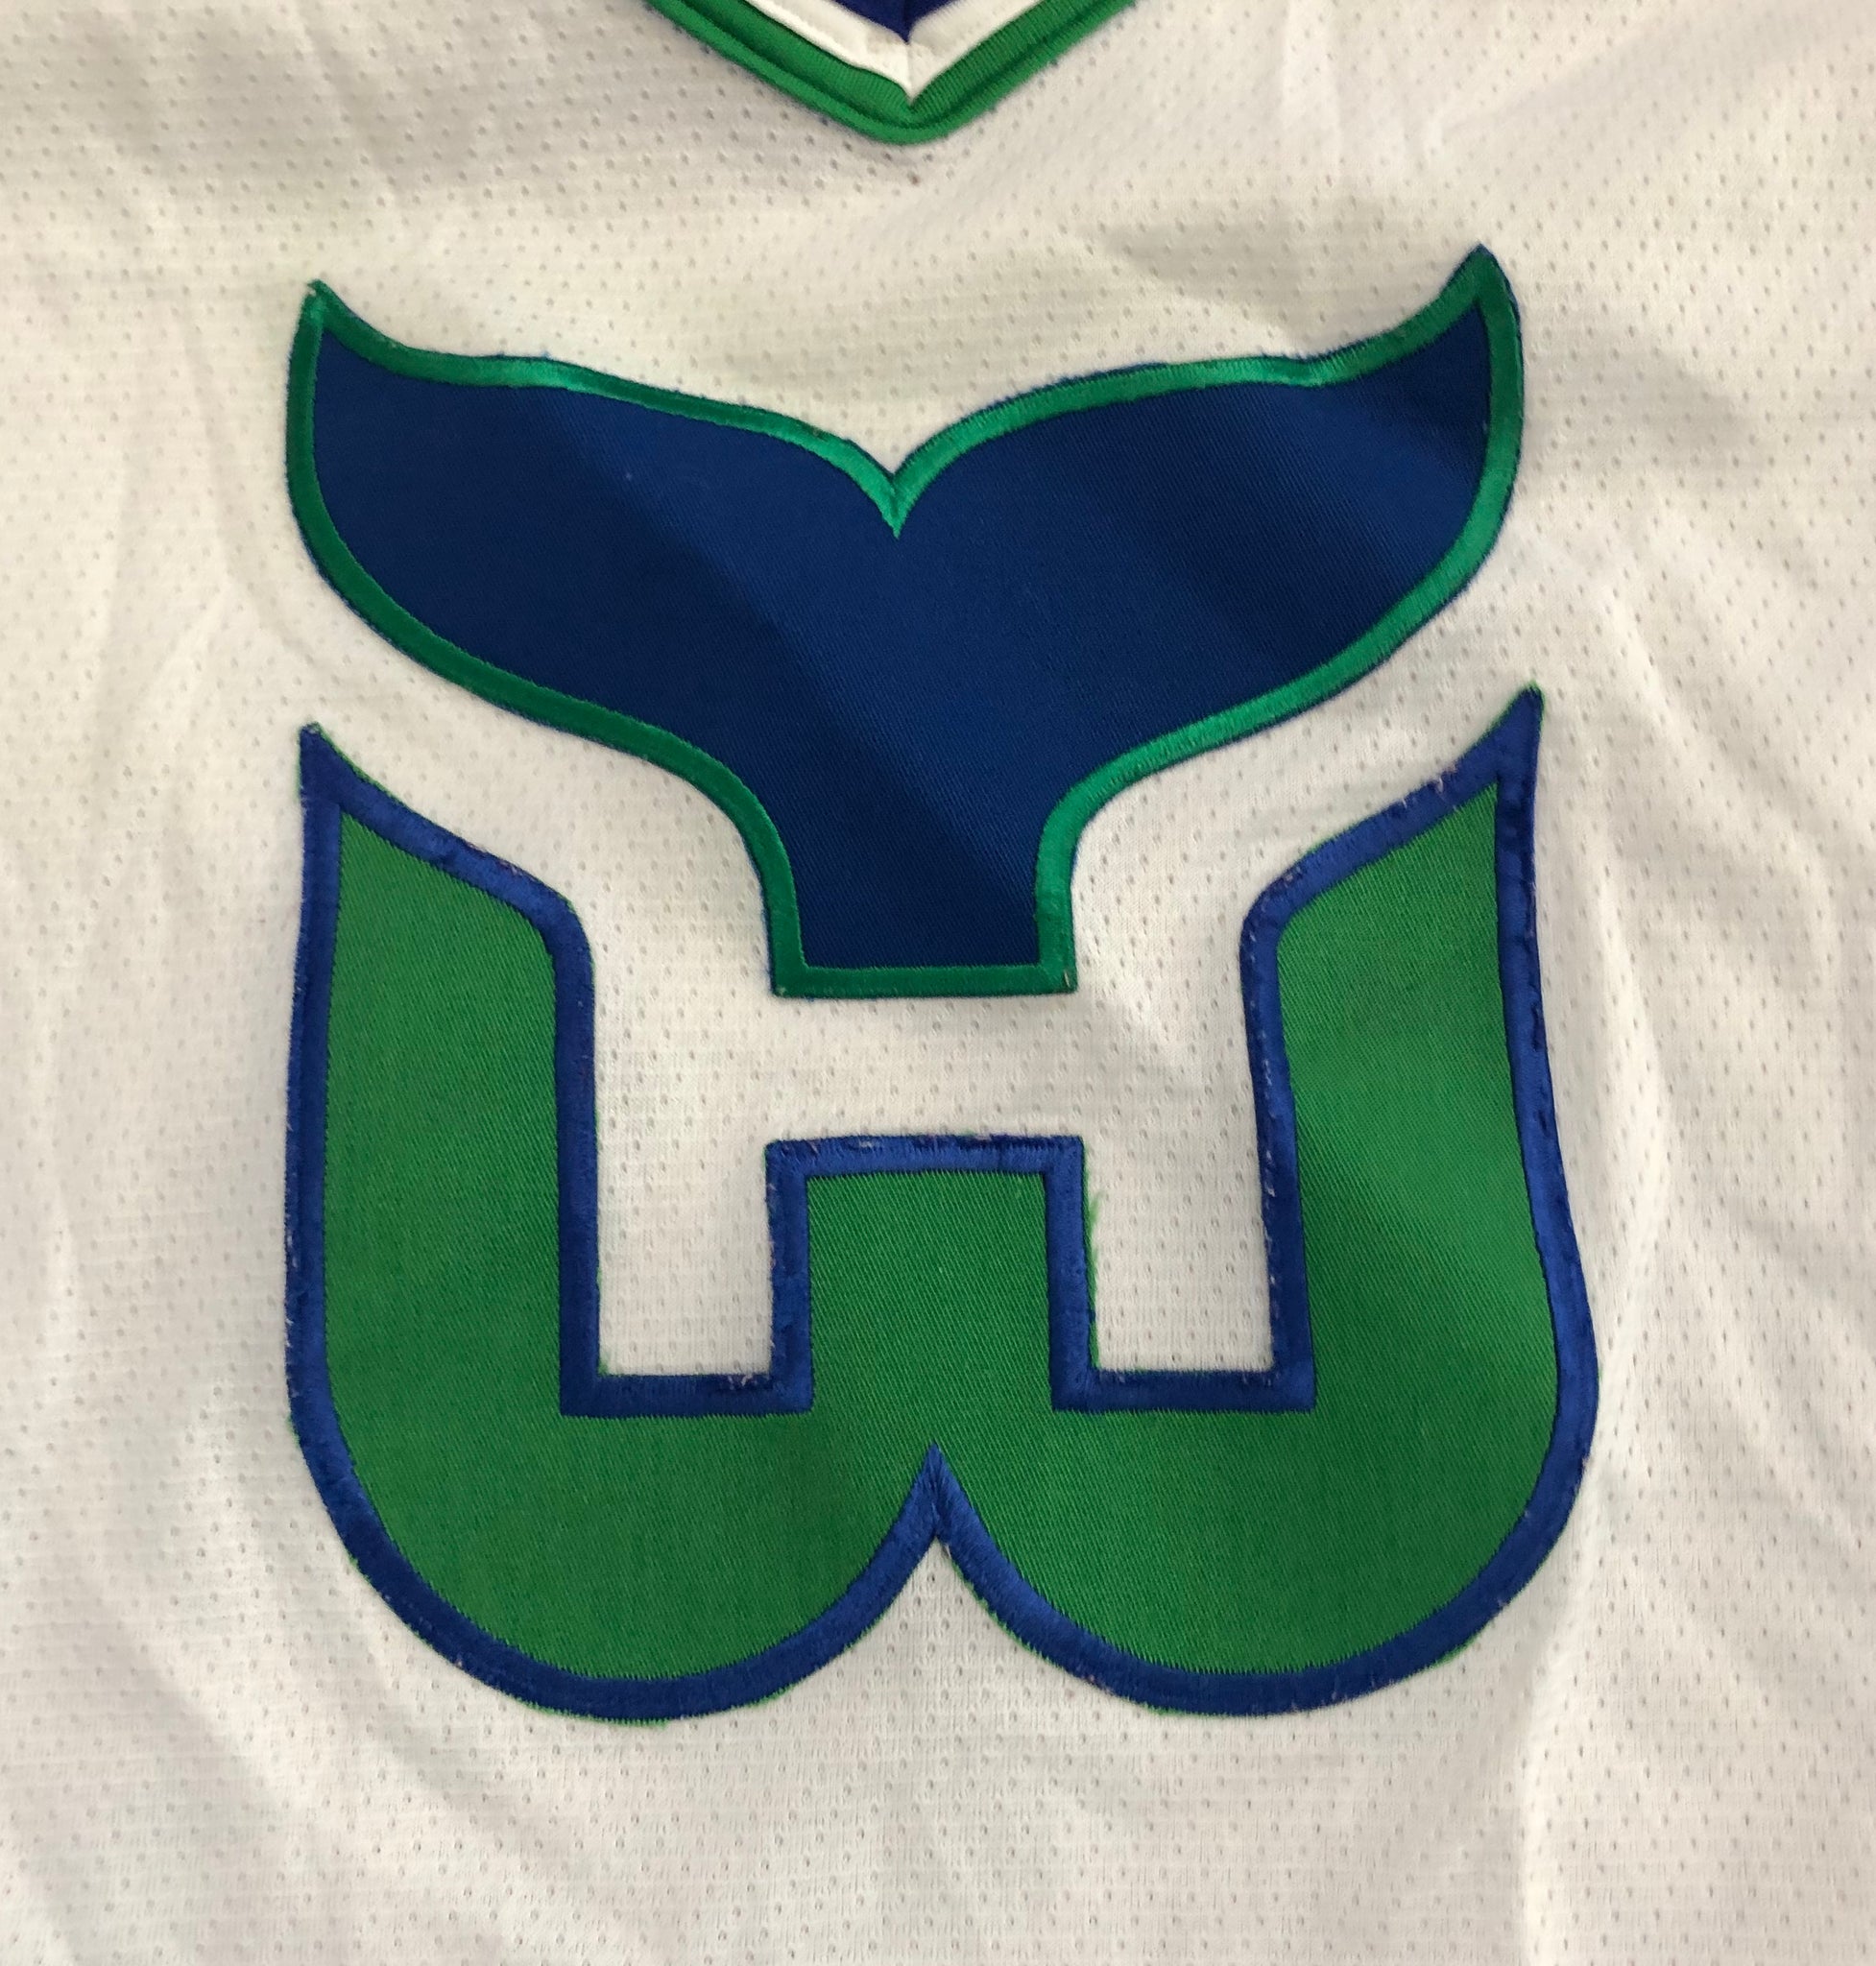 CCM Hartford Whalers NHL Fan Jerseys for sale